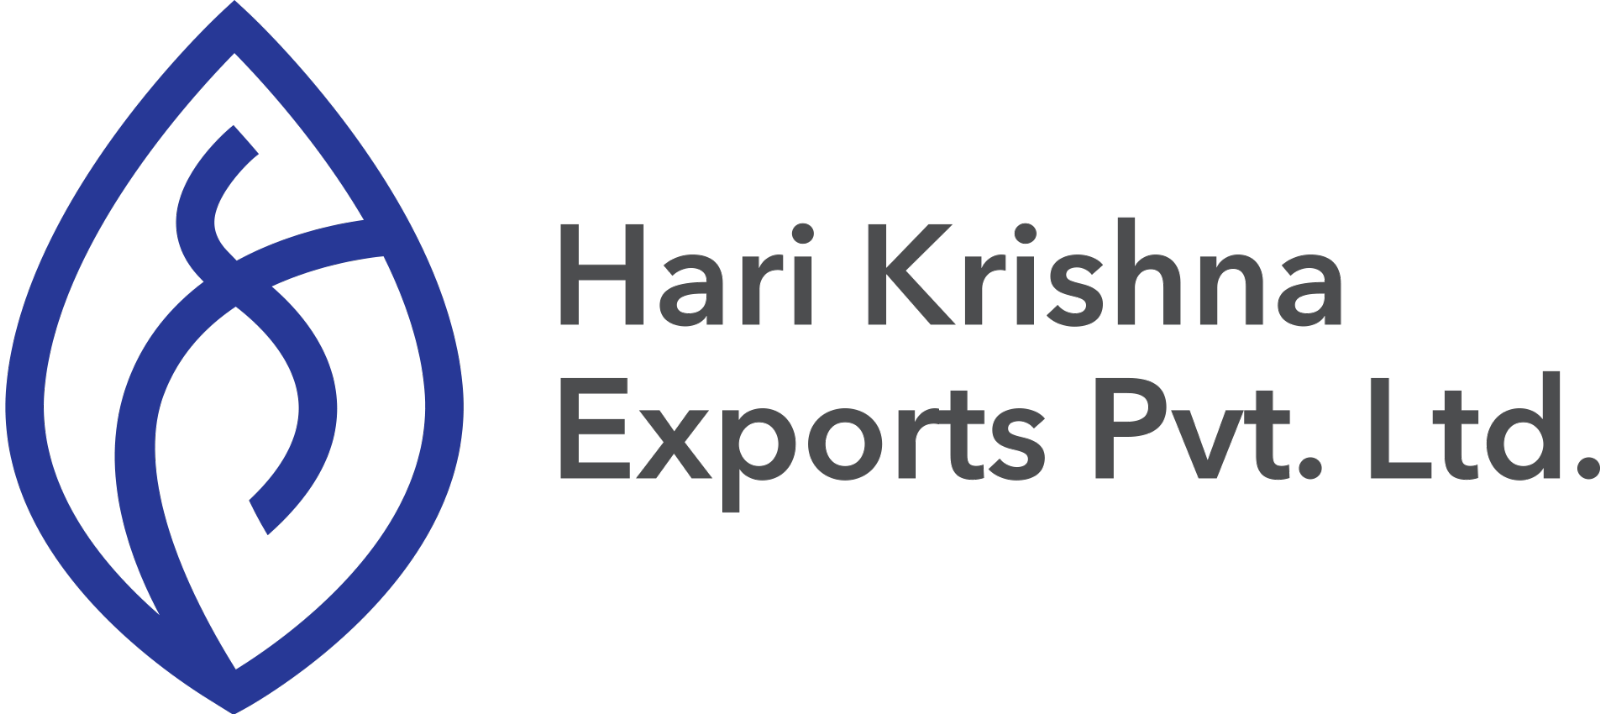 Hari Krishna Exports